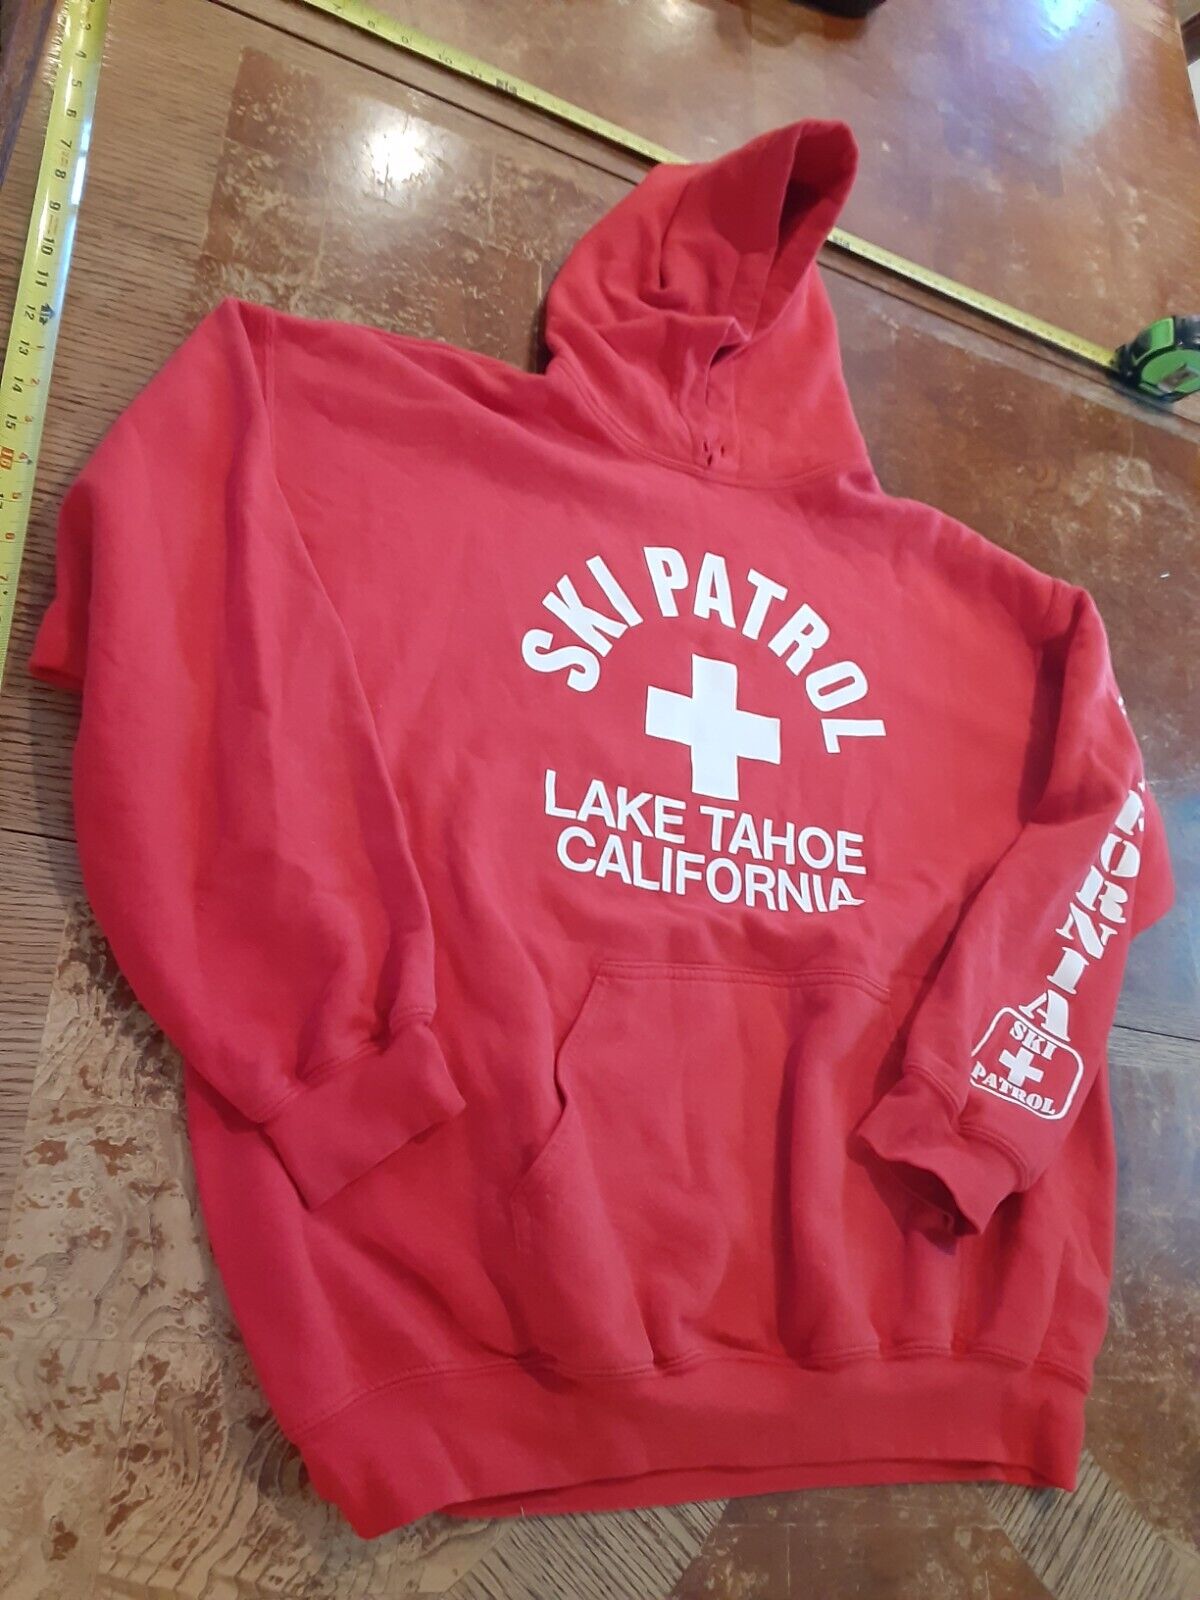 SKI PATROL - LAKE TAHOE CALIFORNIA (XL) Long Sleeve Sweater #4